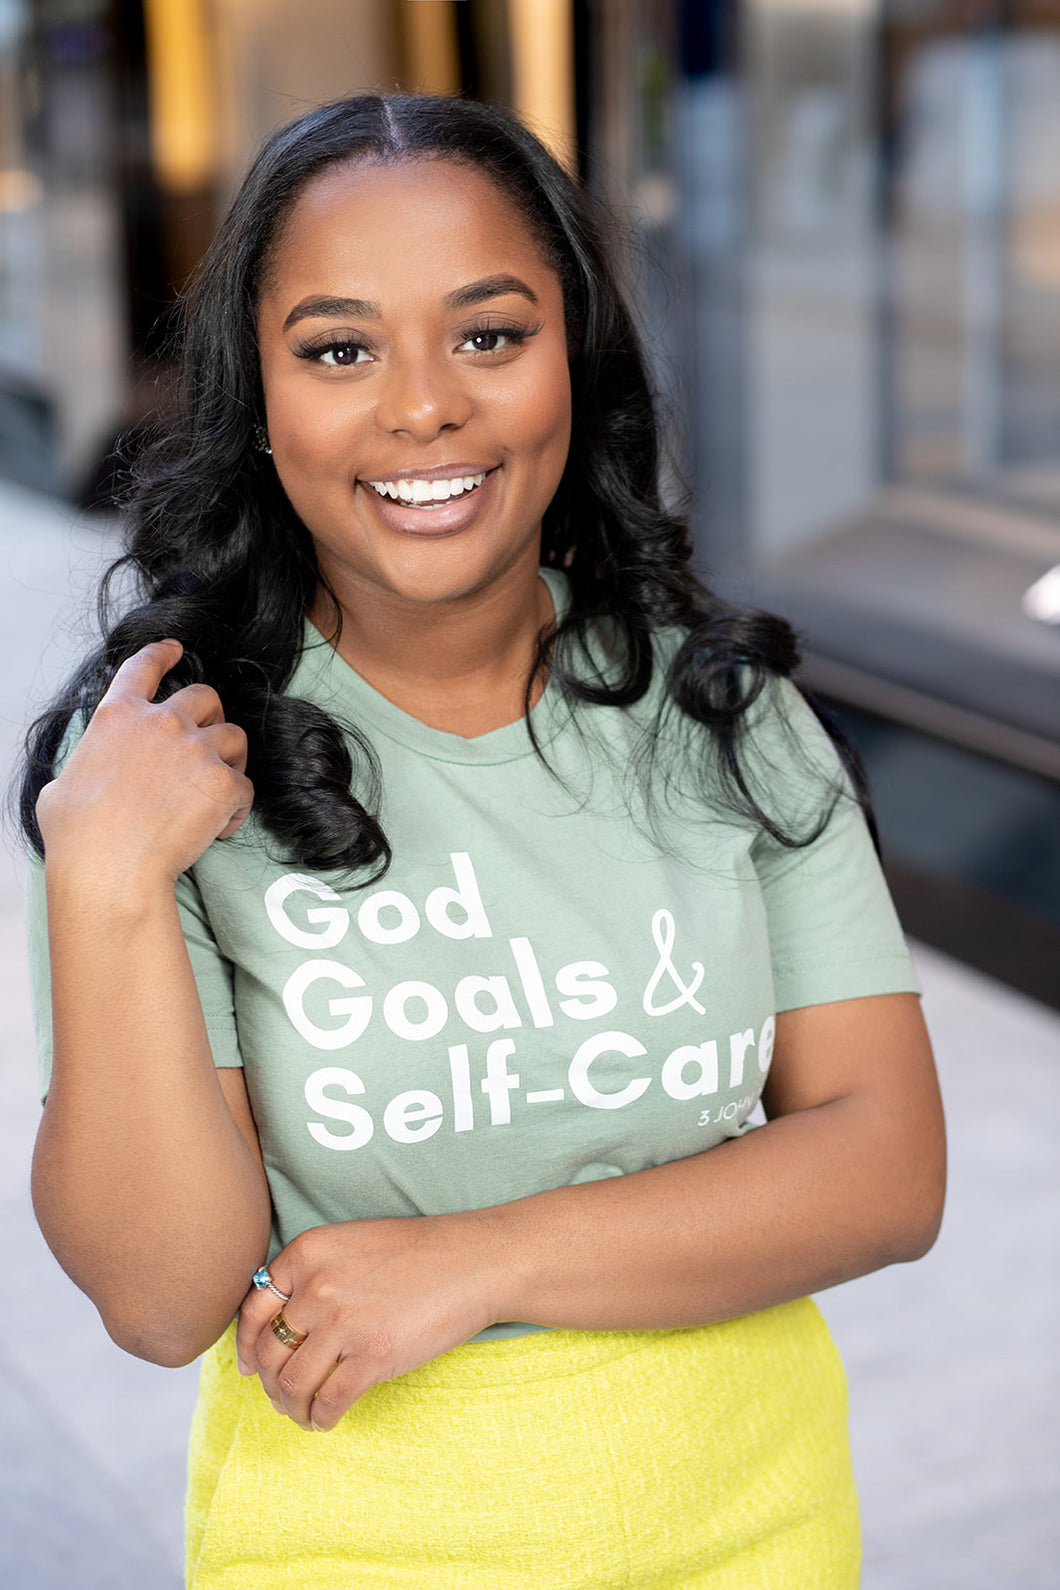 God Goals & Self-Care Tee - Mint